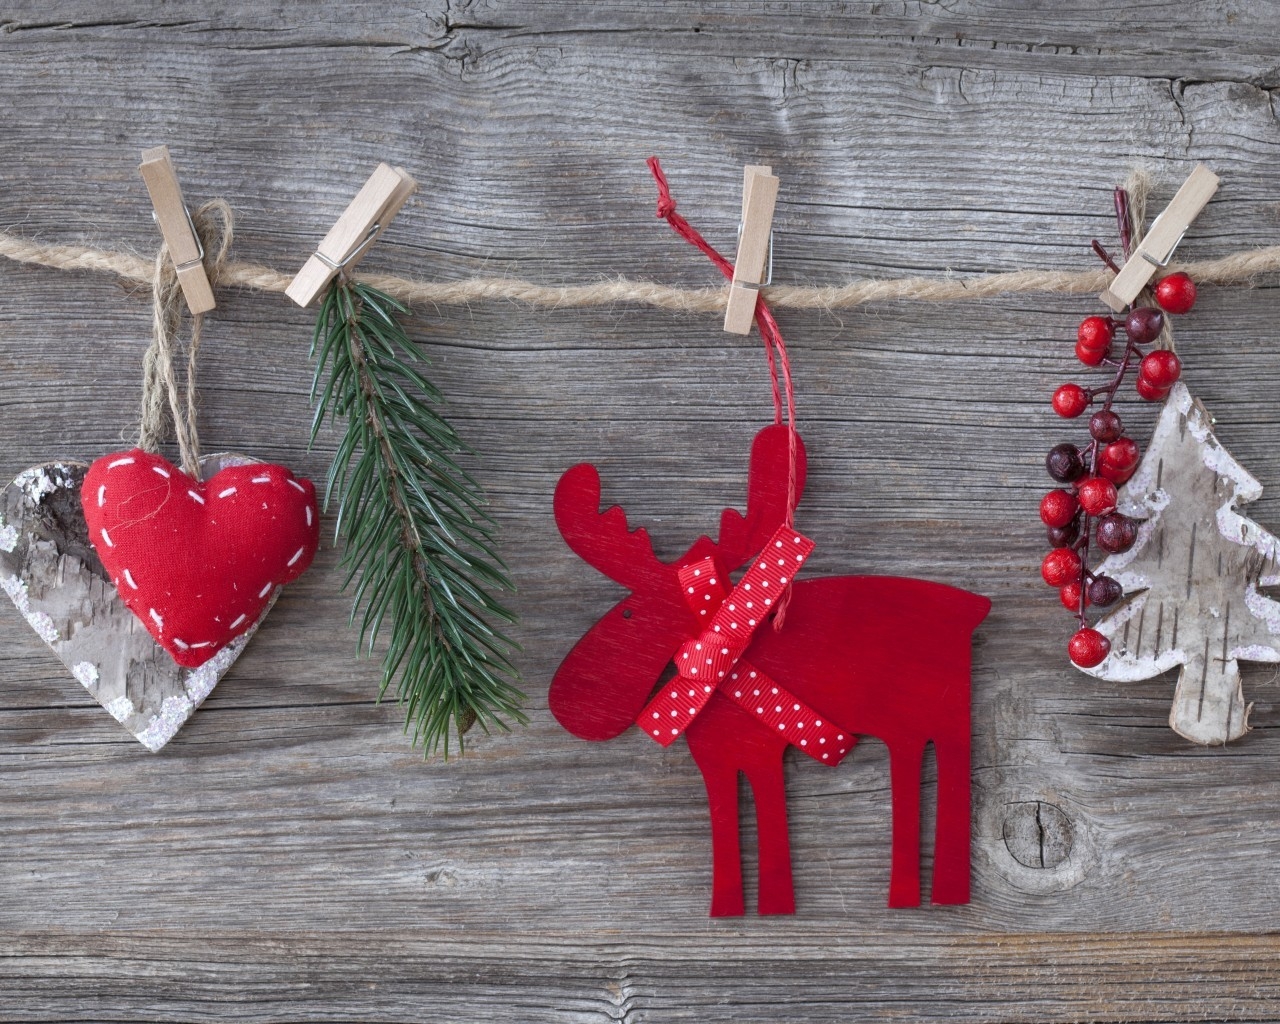 Handmade Ornaments for Christmas for 1280 x 1024 resolution